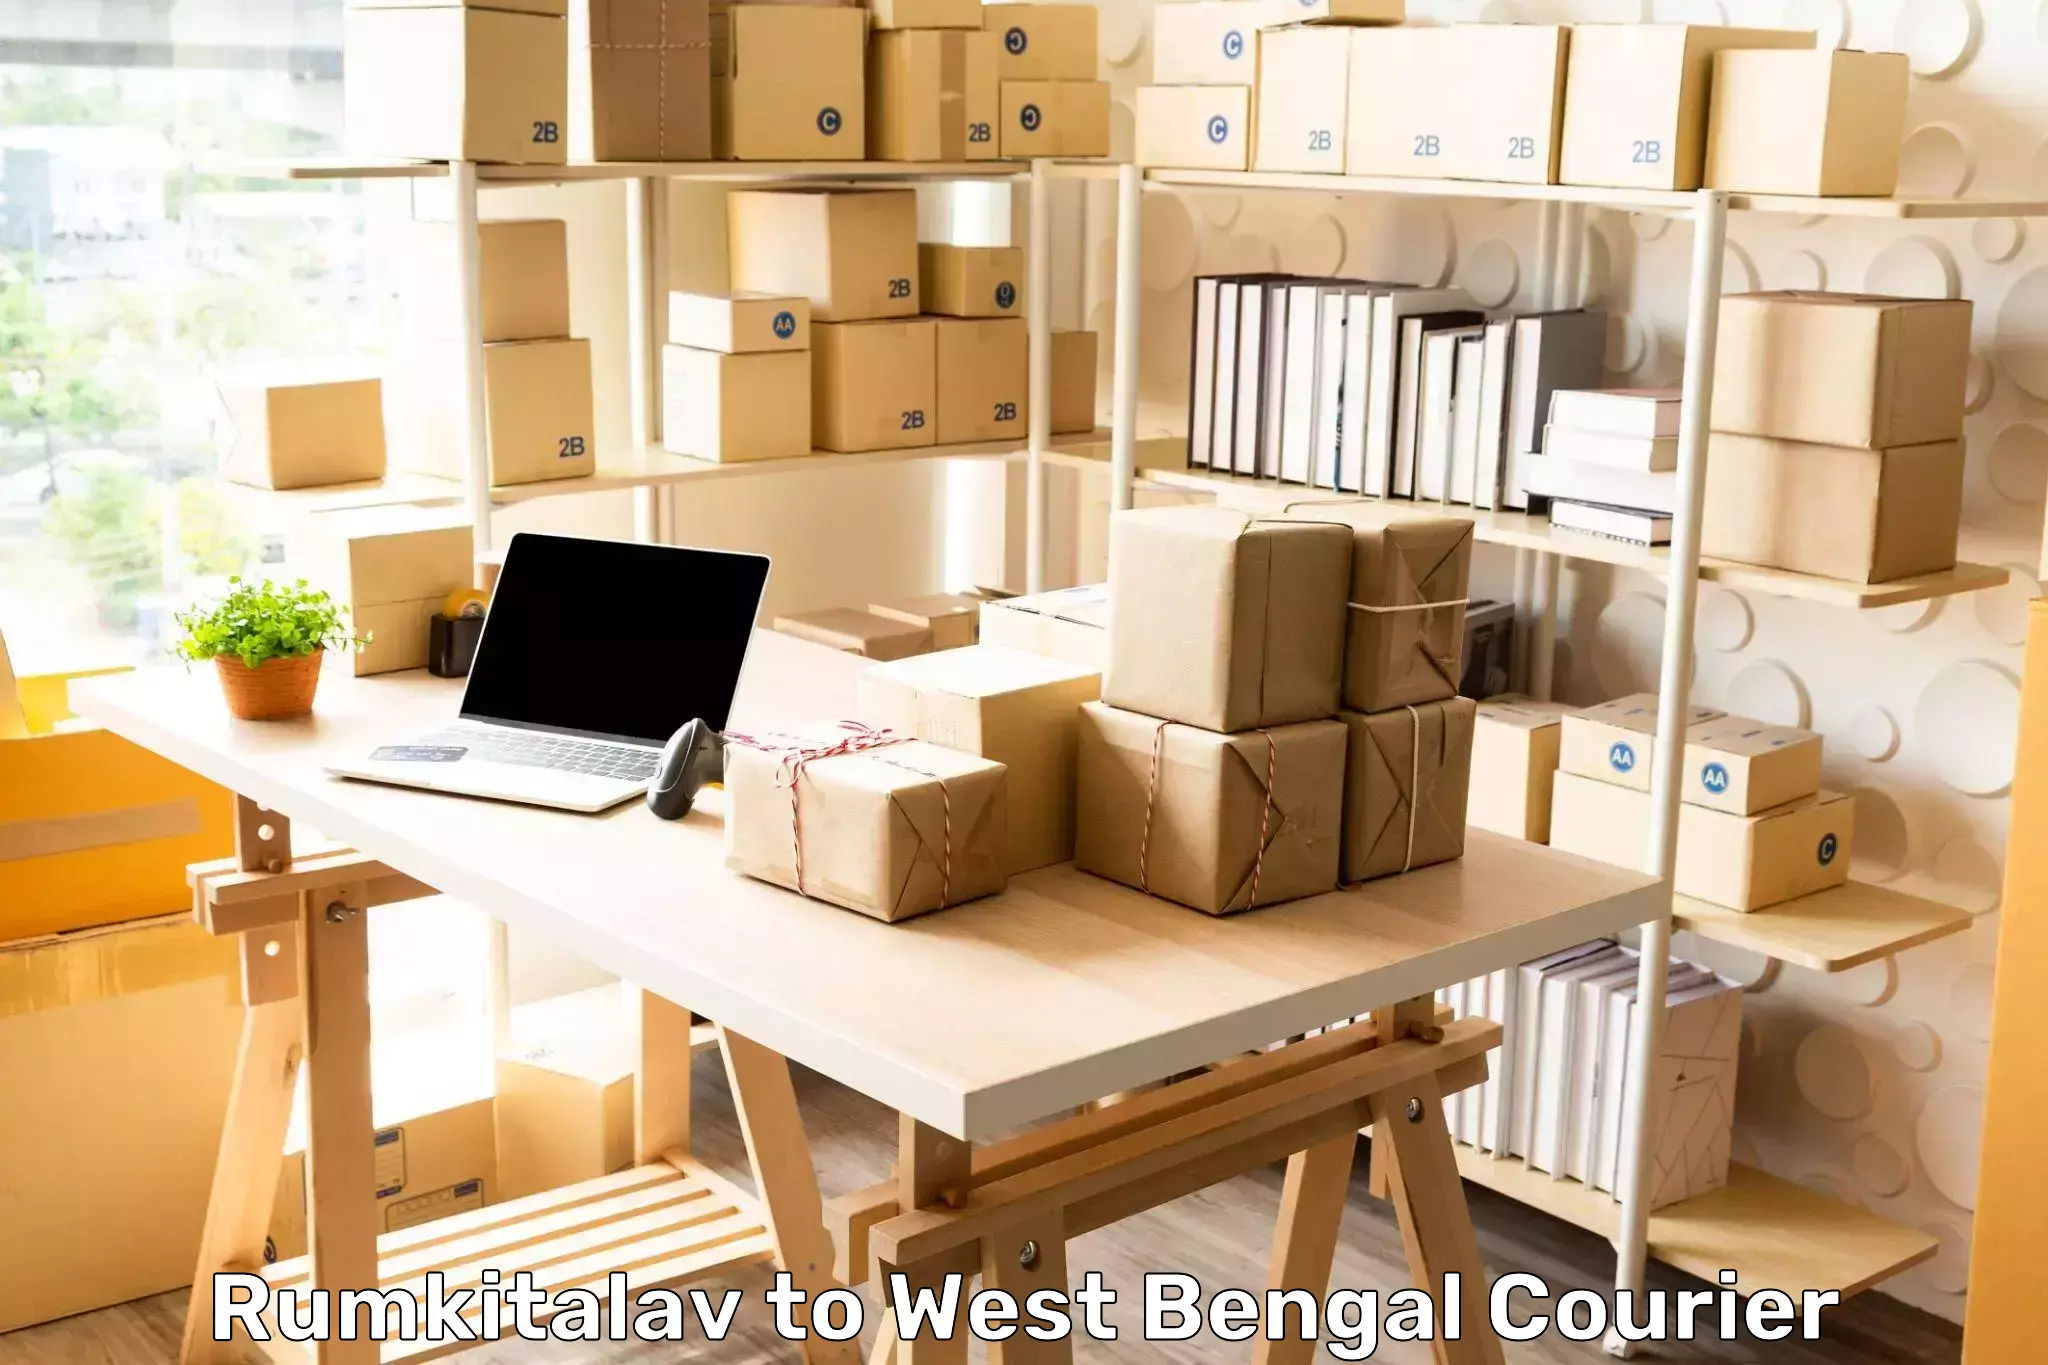 Global logistics network in Rumkitalav to West Bengal